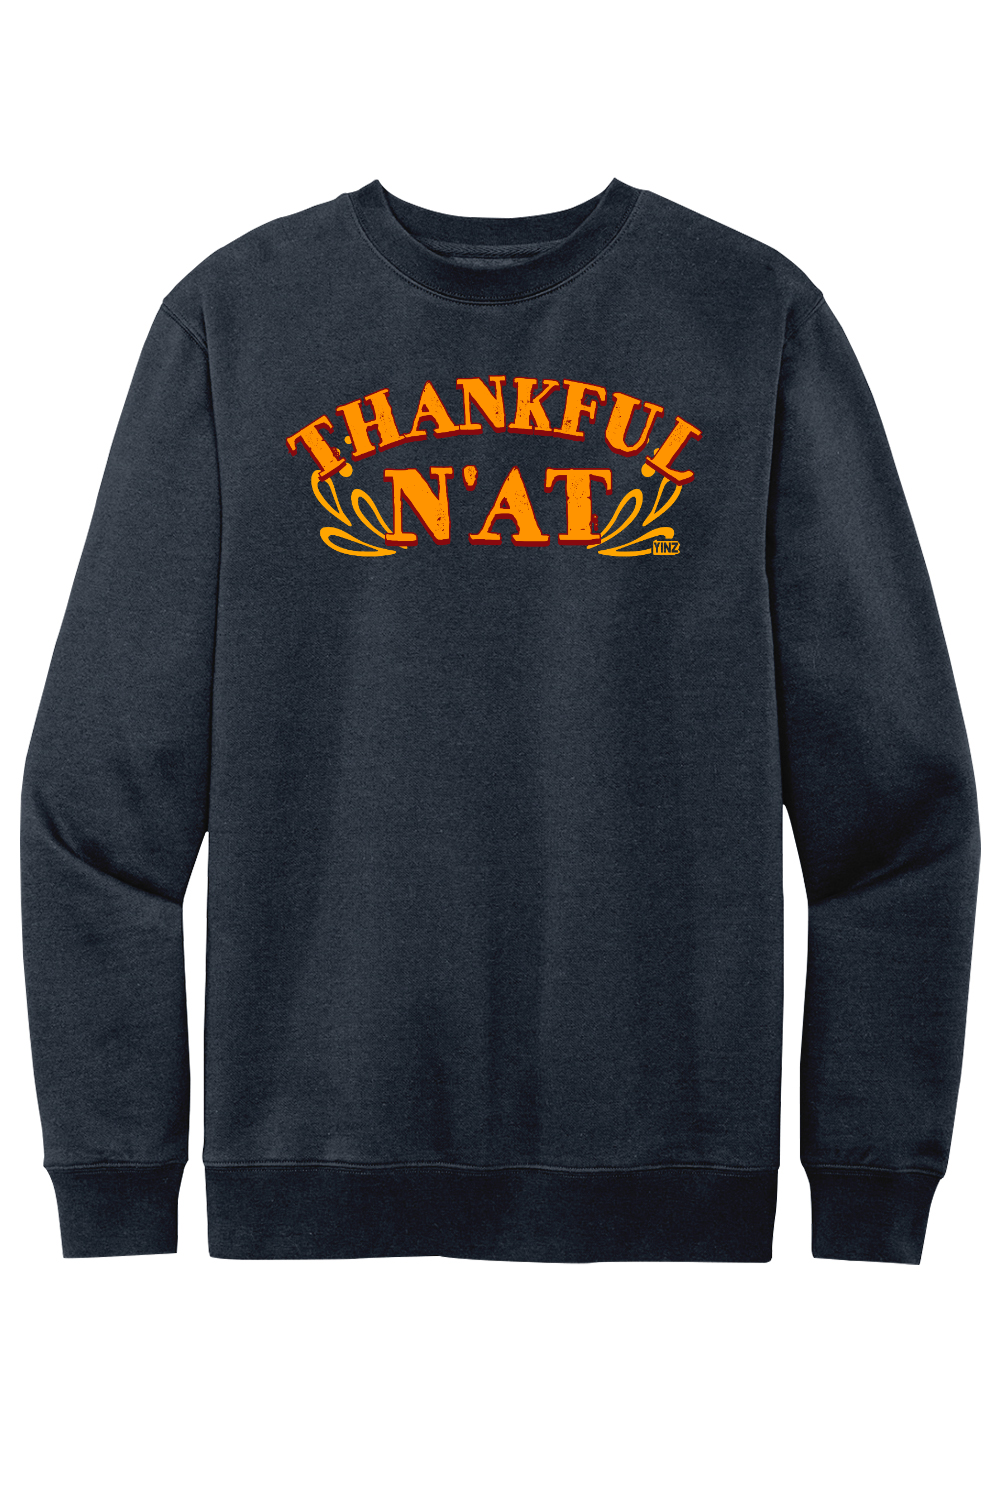 Thankful N'at - Fleece Crew Sweatshirt - Yinzylvania